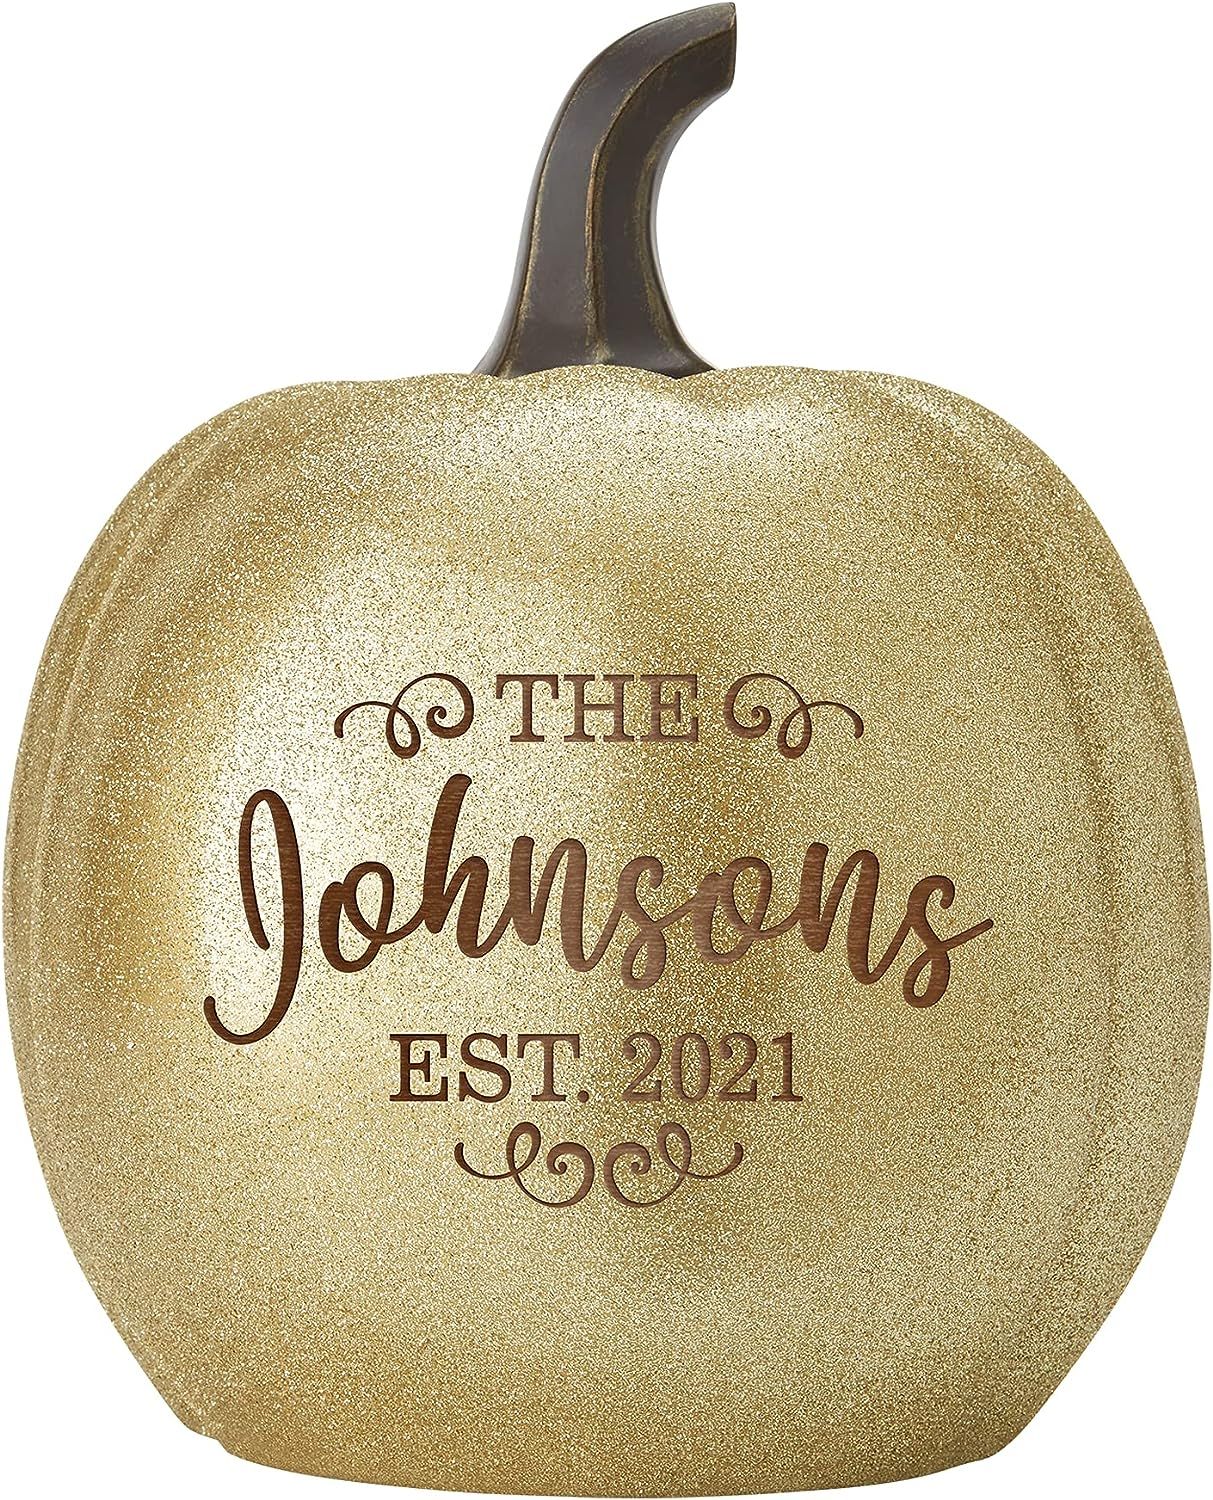 Let's Make Memories Personalized Light Up Pumpkin - Family Name Jack-O-Lantern Halloween Décor -... | Amazon (US)